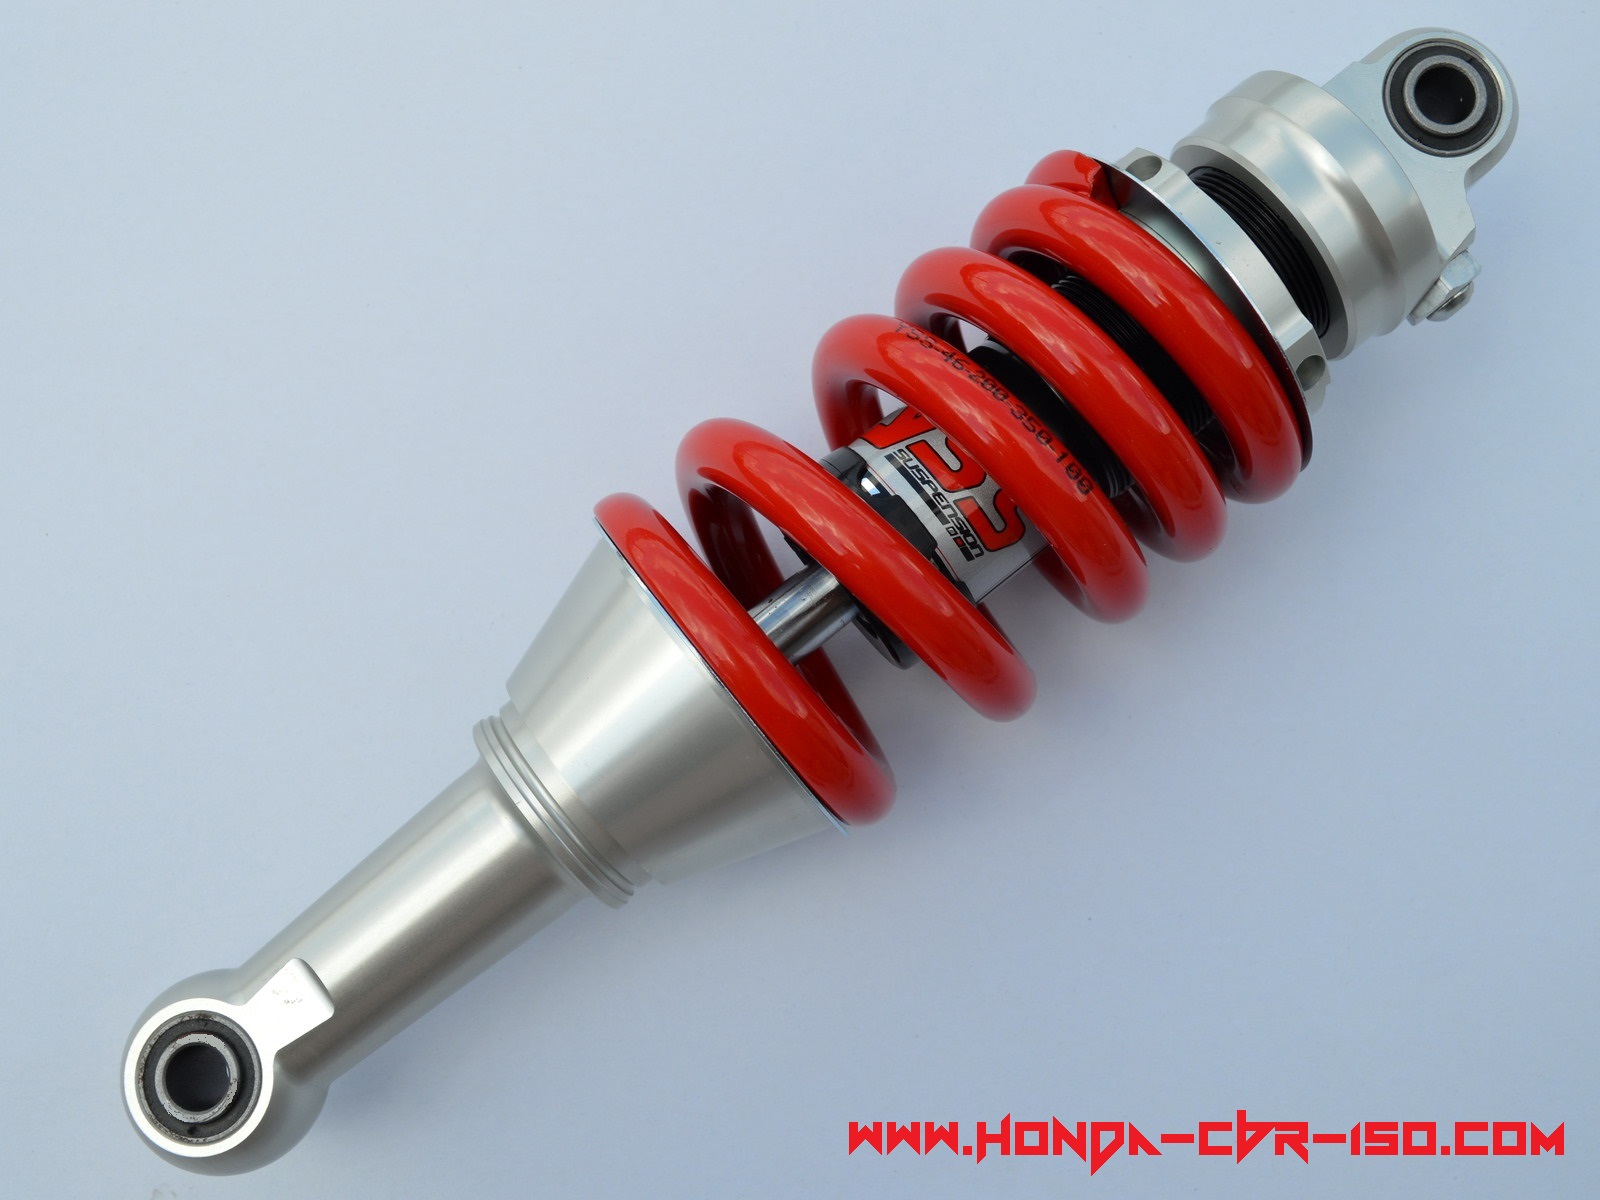 Genuine Honda CBR 150 racing adjustable YSS rear GAS shock damper aluminium  case upside down front forks tube spring simmering